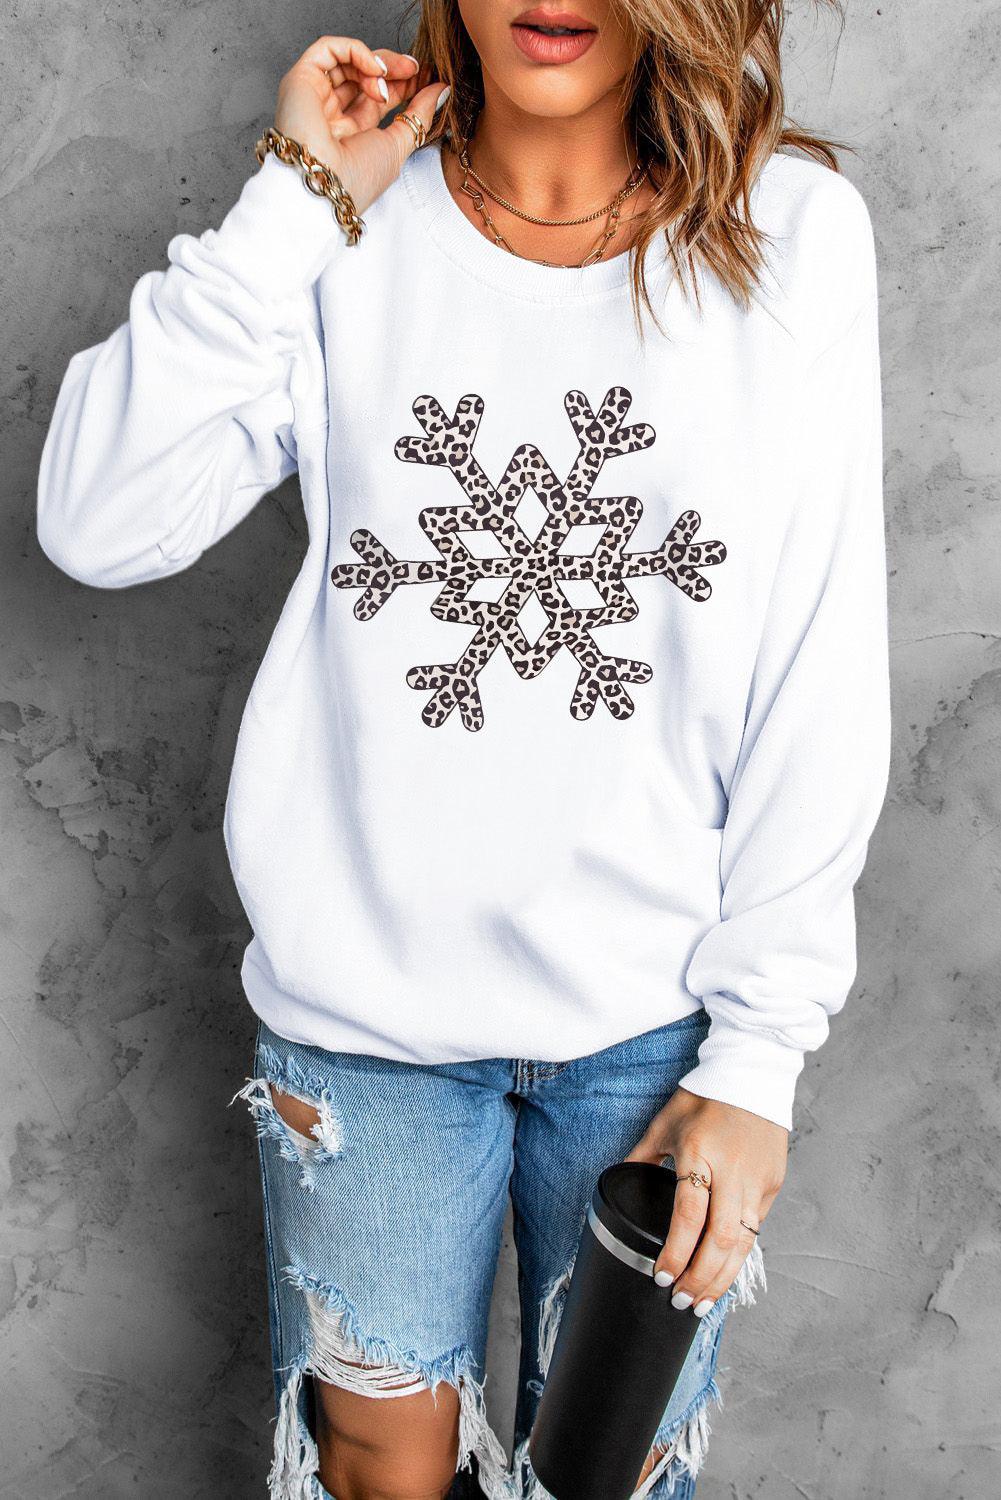 Snowflake Graphic Sweatshirt - Olive Ave